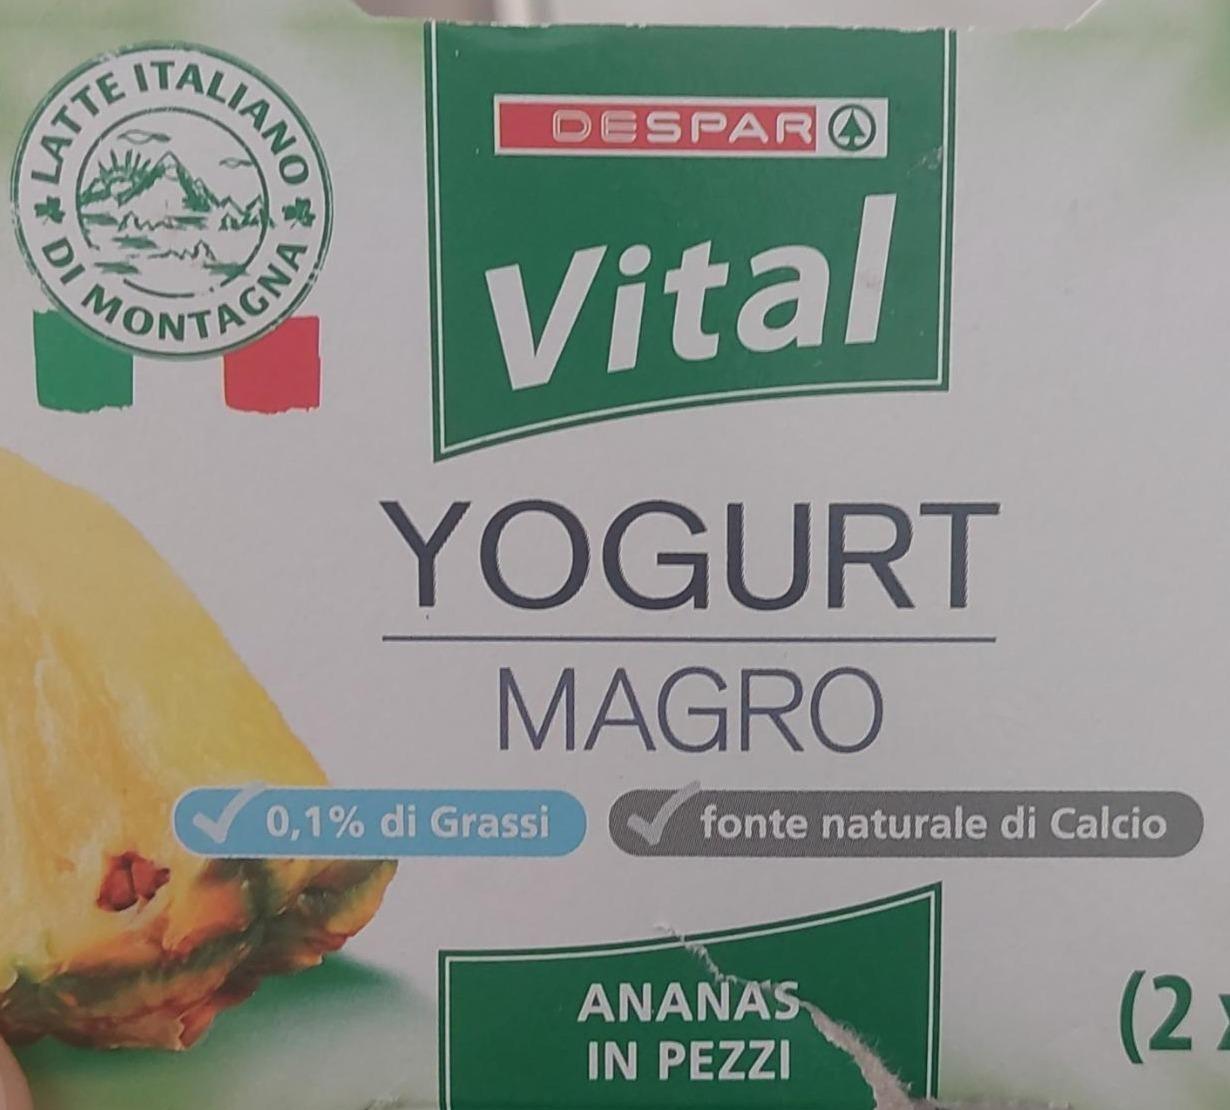 Fotografie - Vital Yogurt Magro Ananas in Pezzi DeSpar